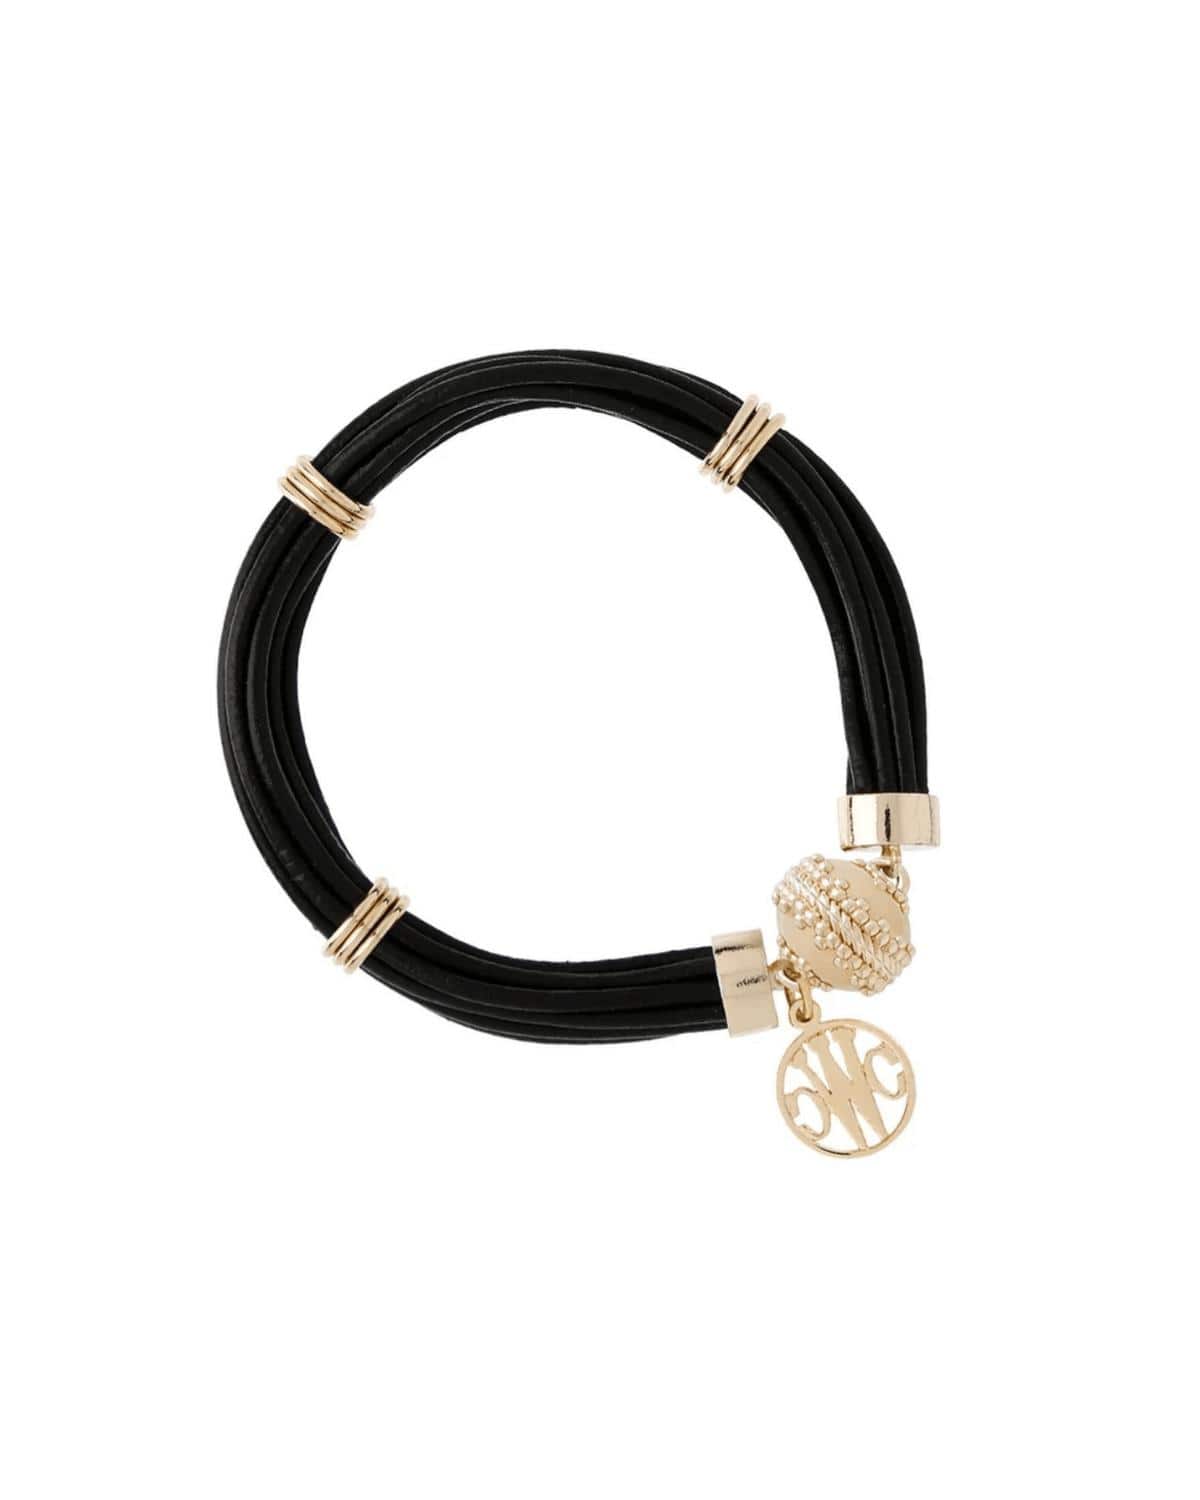 Clara Williams Bracelets Aspen Leather Bracelet - Jet Black